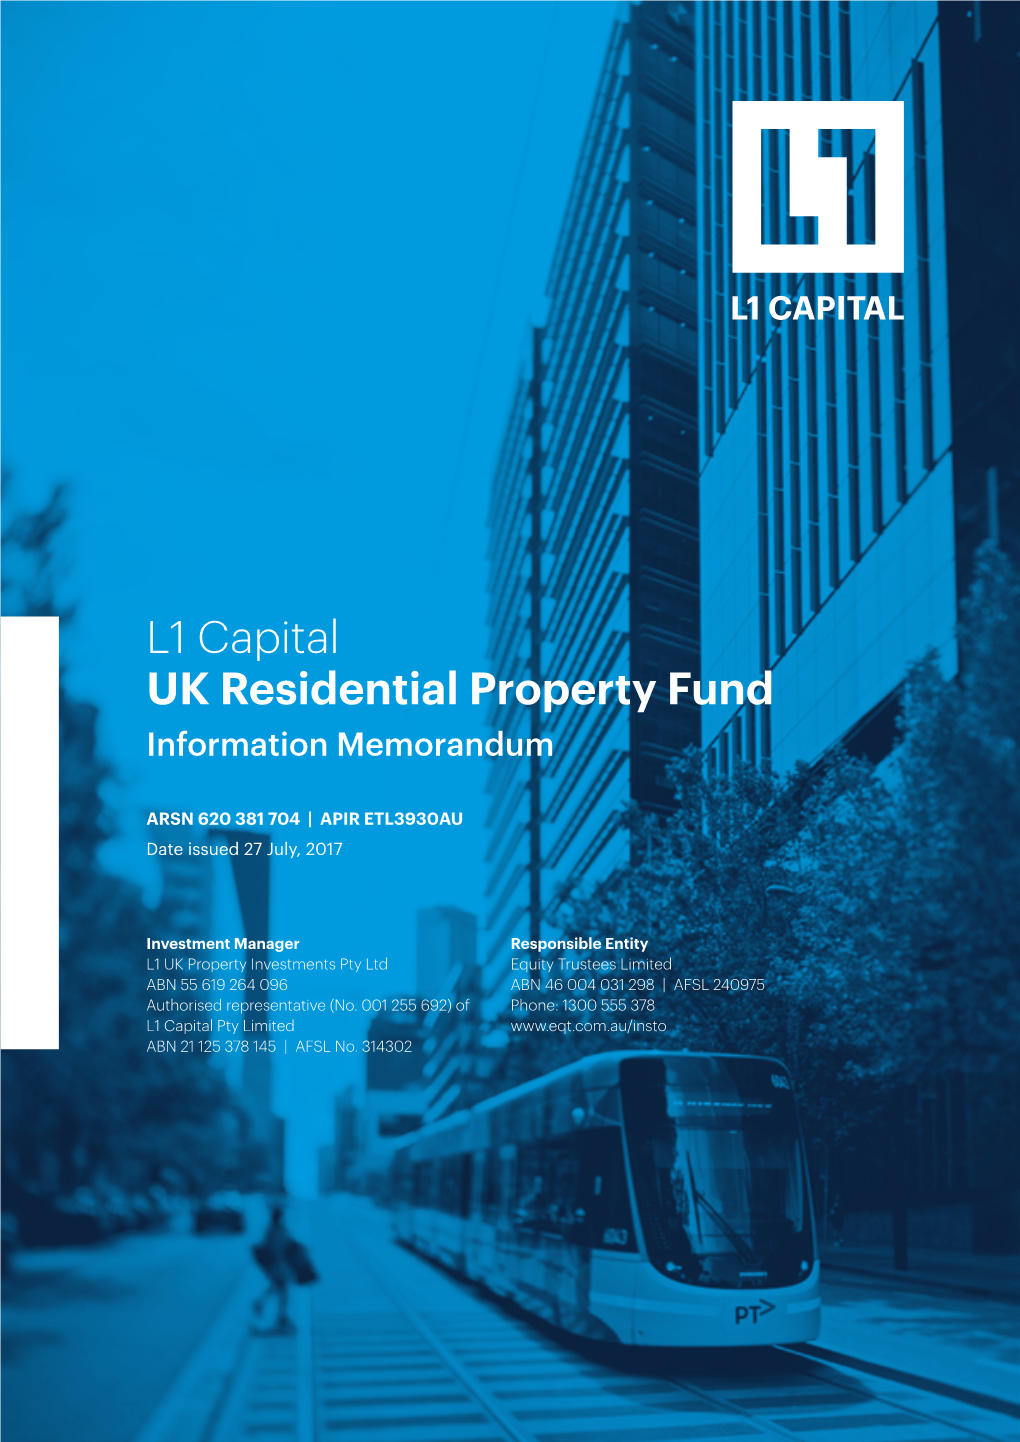 L1 Capital UK Residential Property Fund Information Memorandum